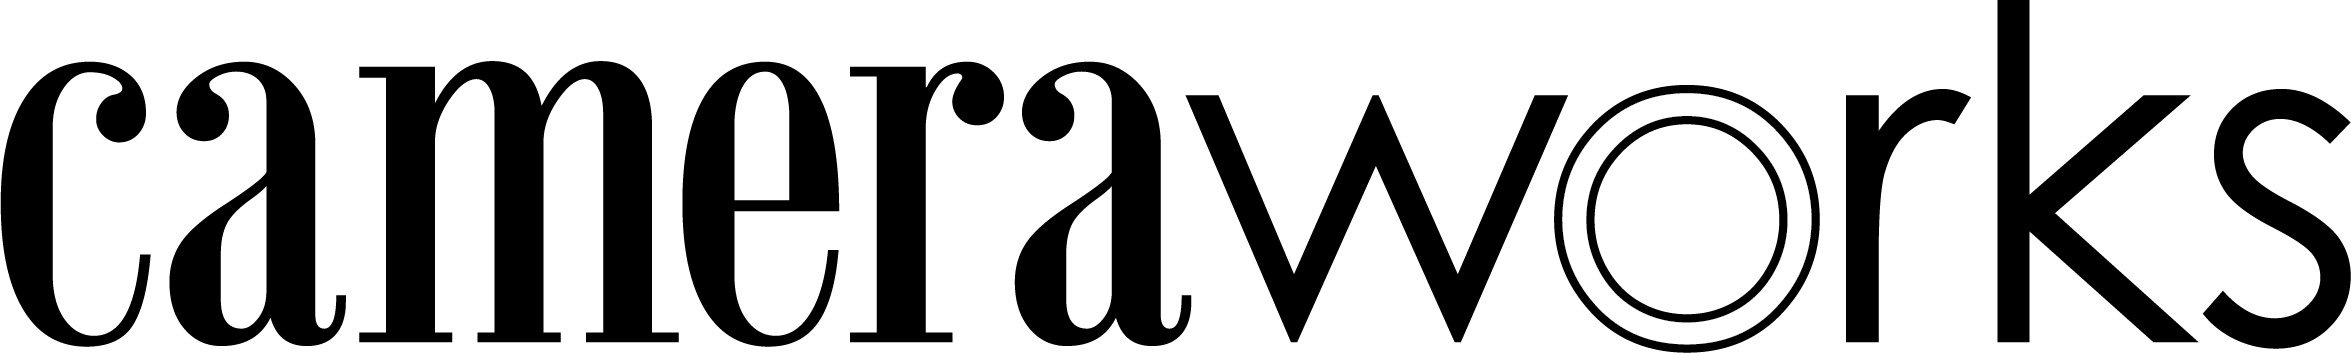 Camera Works logo